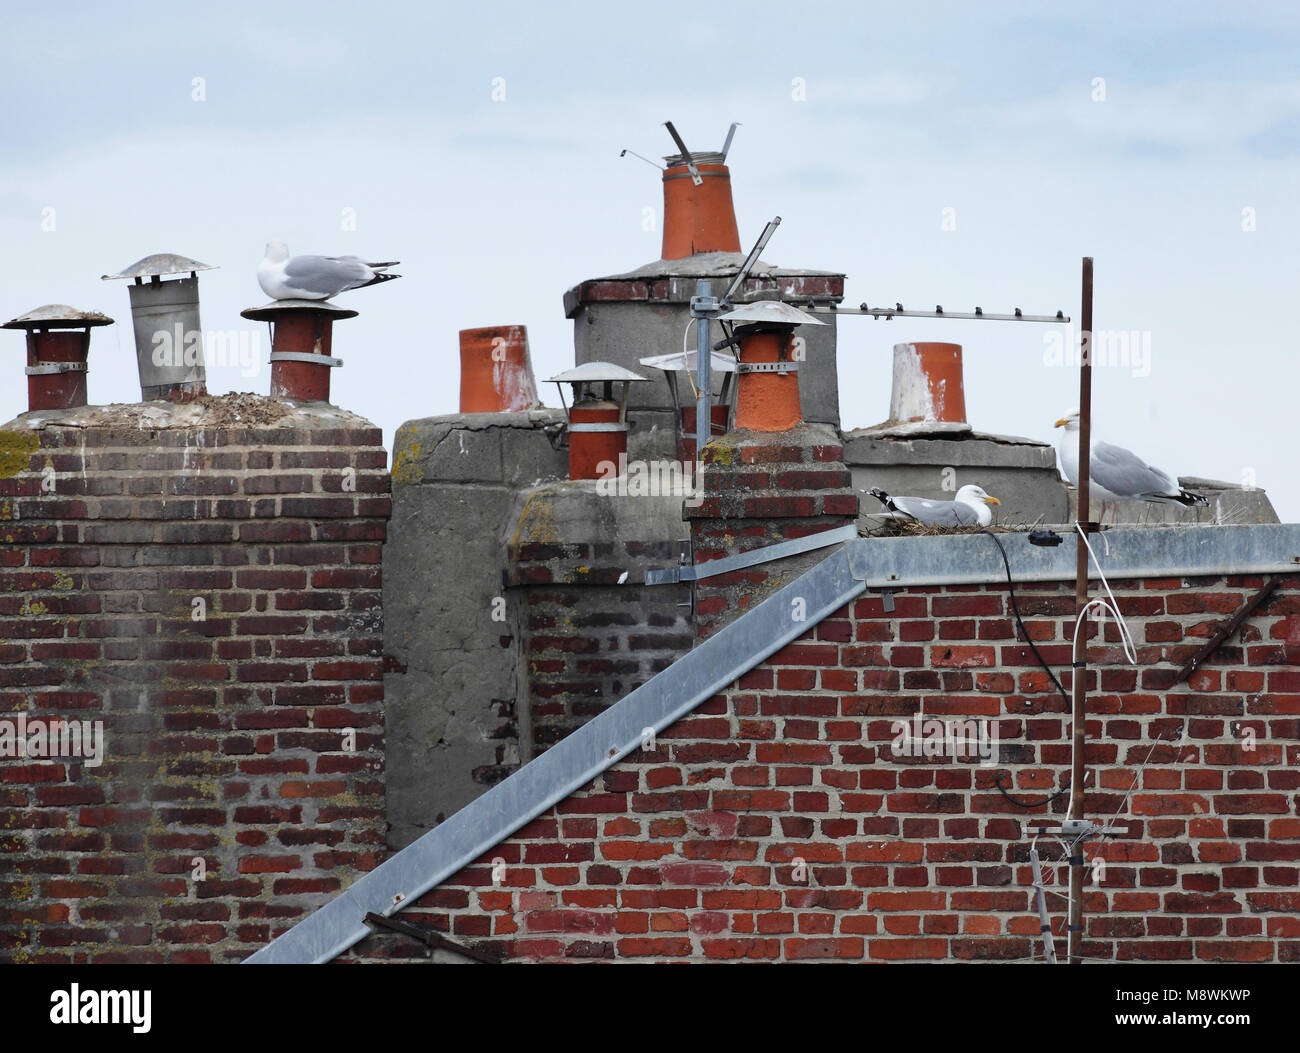 Zilvermeeuw broedend op dak, aringa Gull allevamento sul tetto Foto Stock